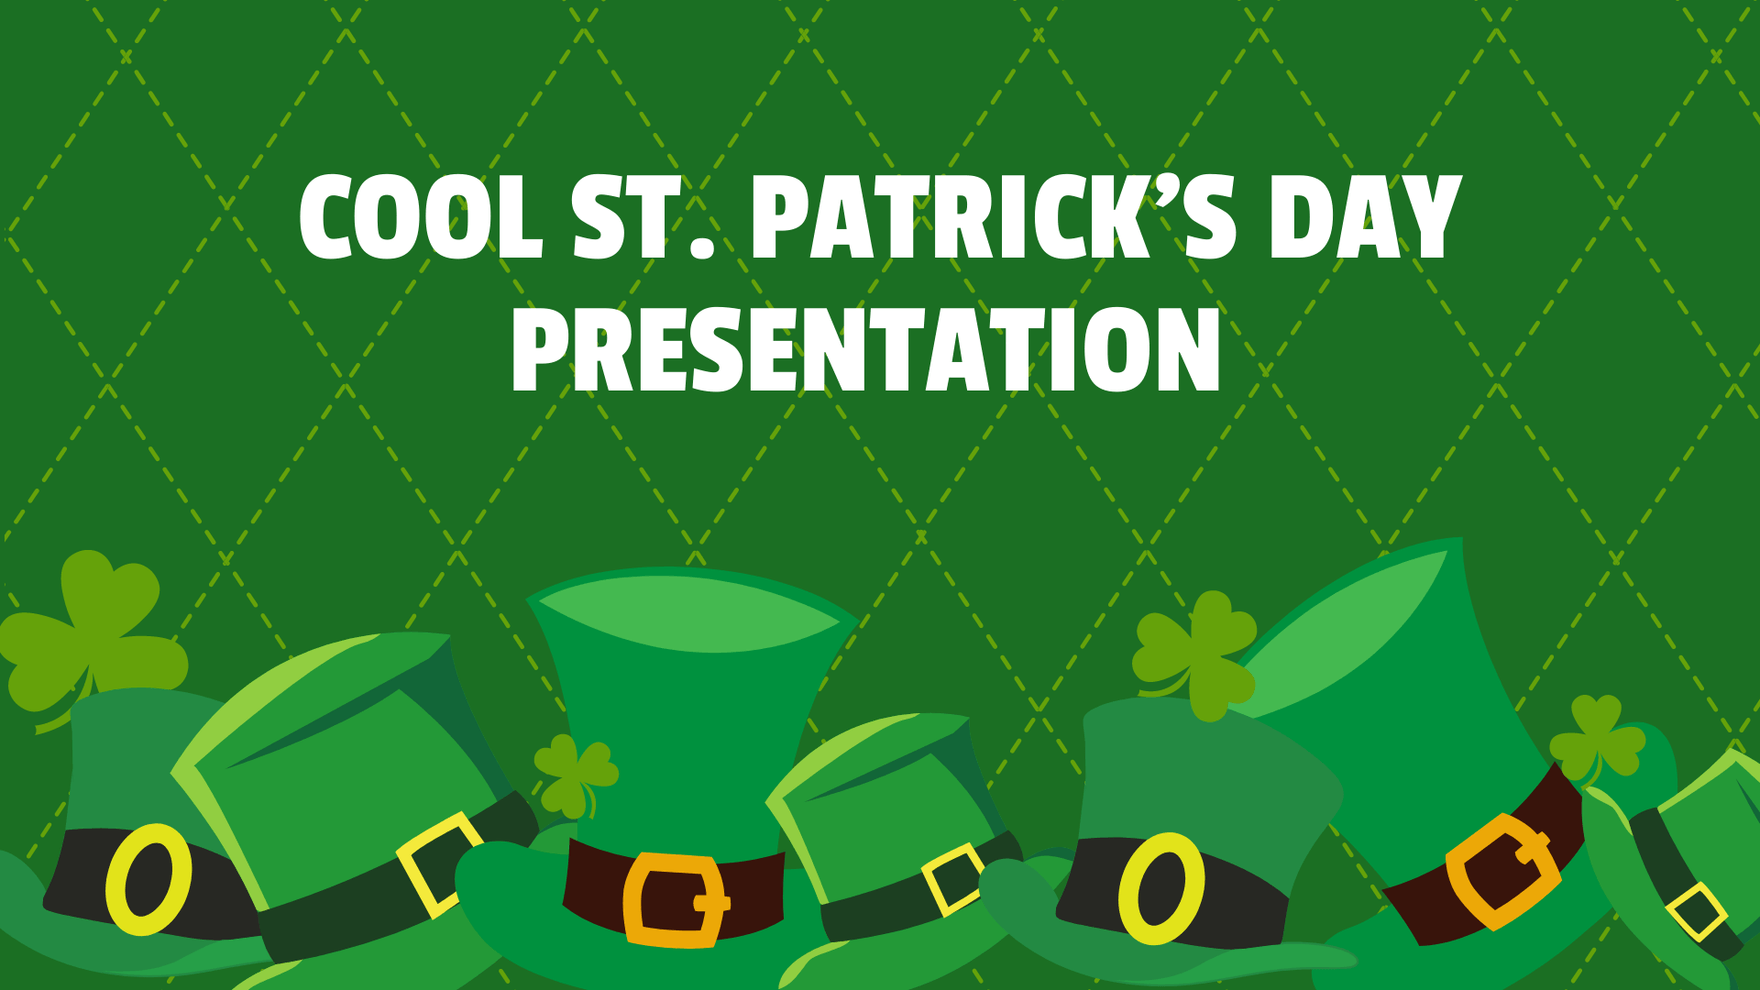 Cool St. Patrick's Day Presentation